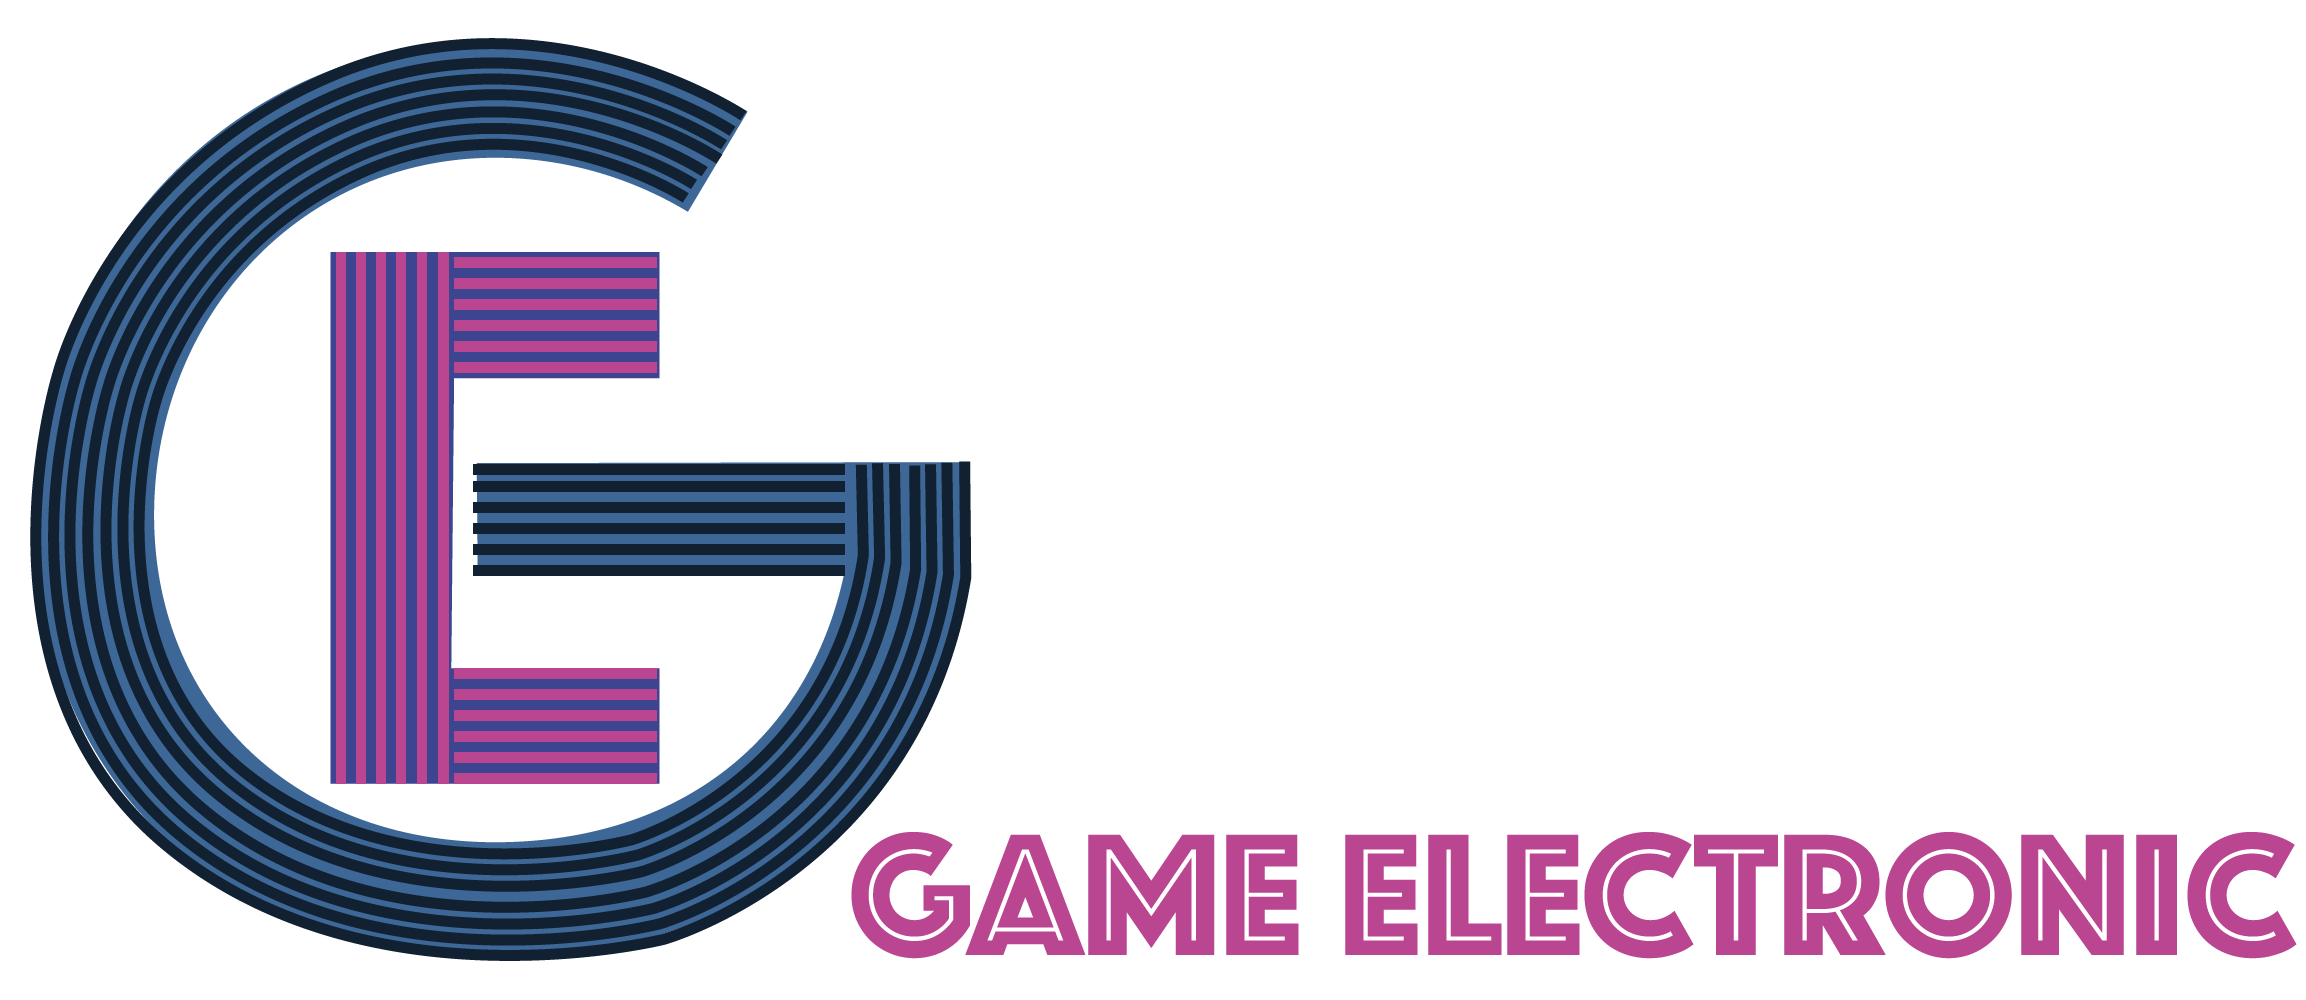 Game Electronic